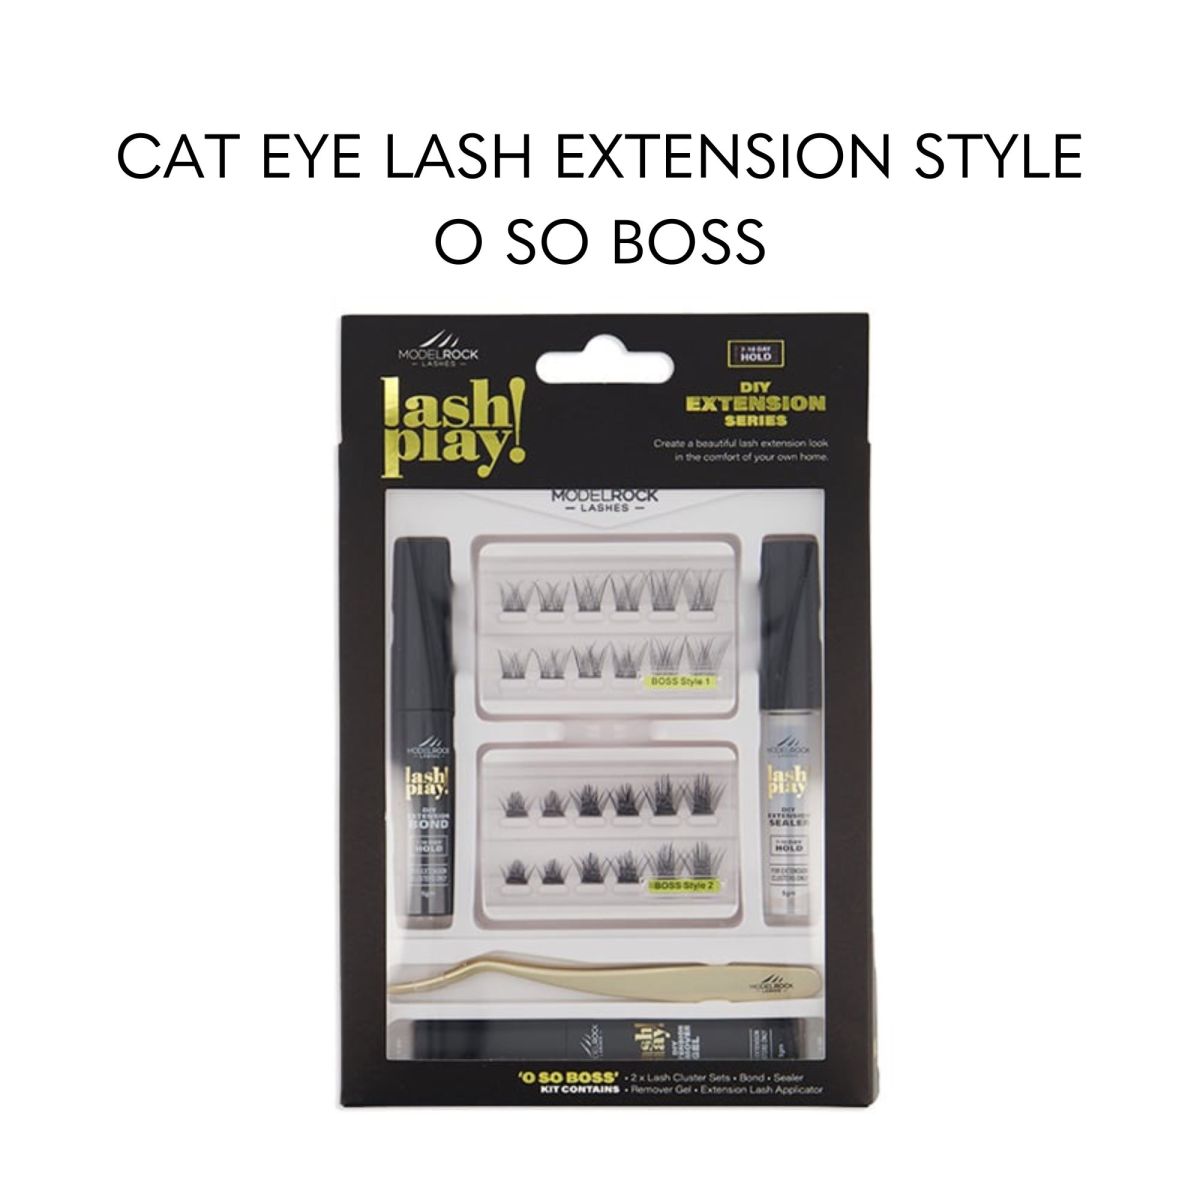 Cat eye lash extension